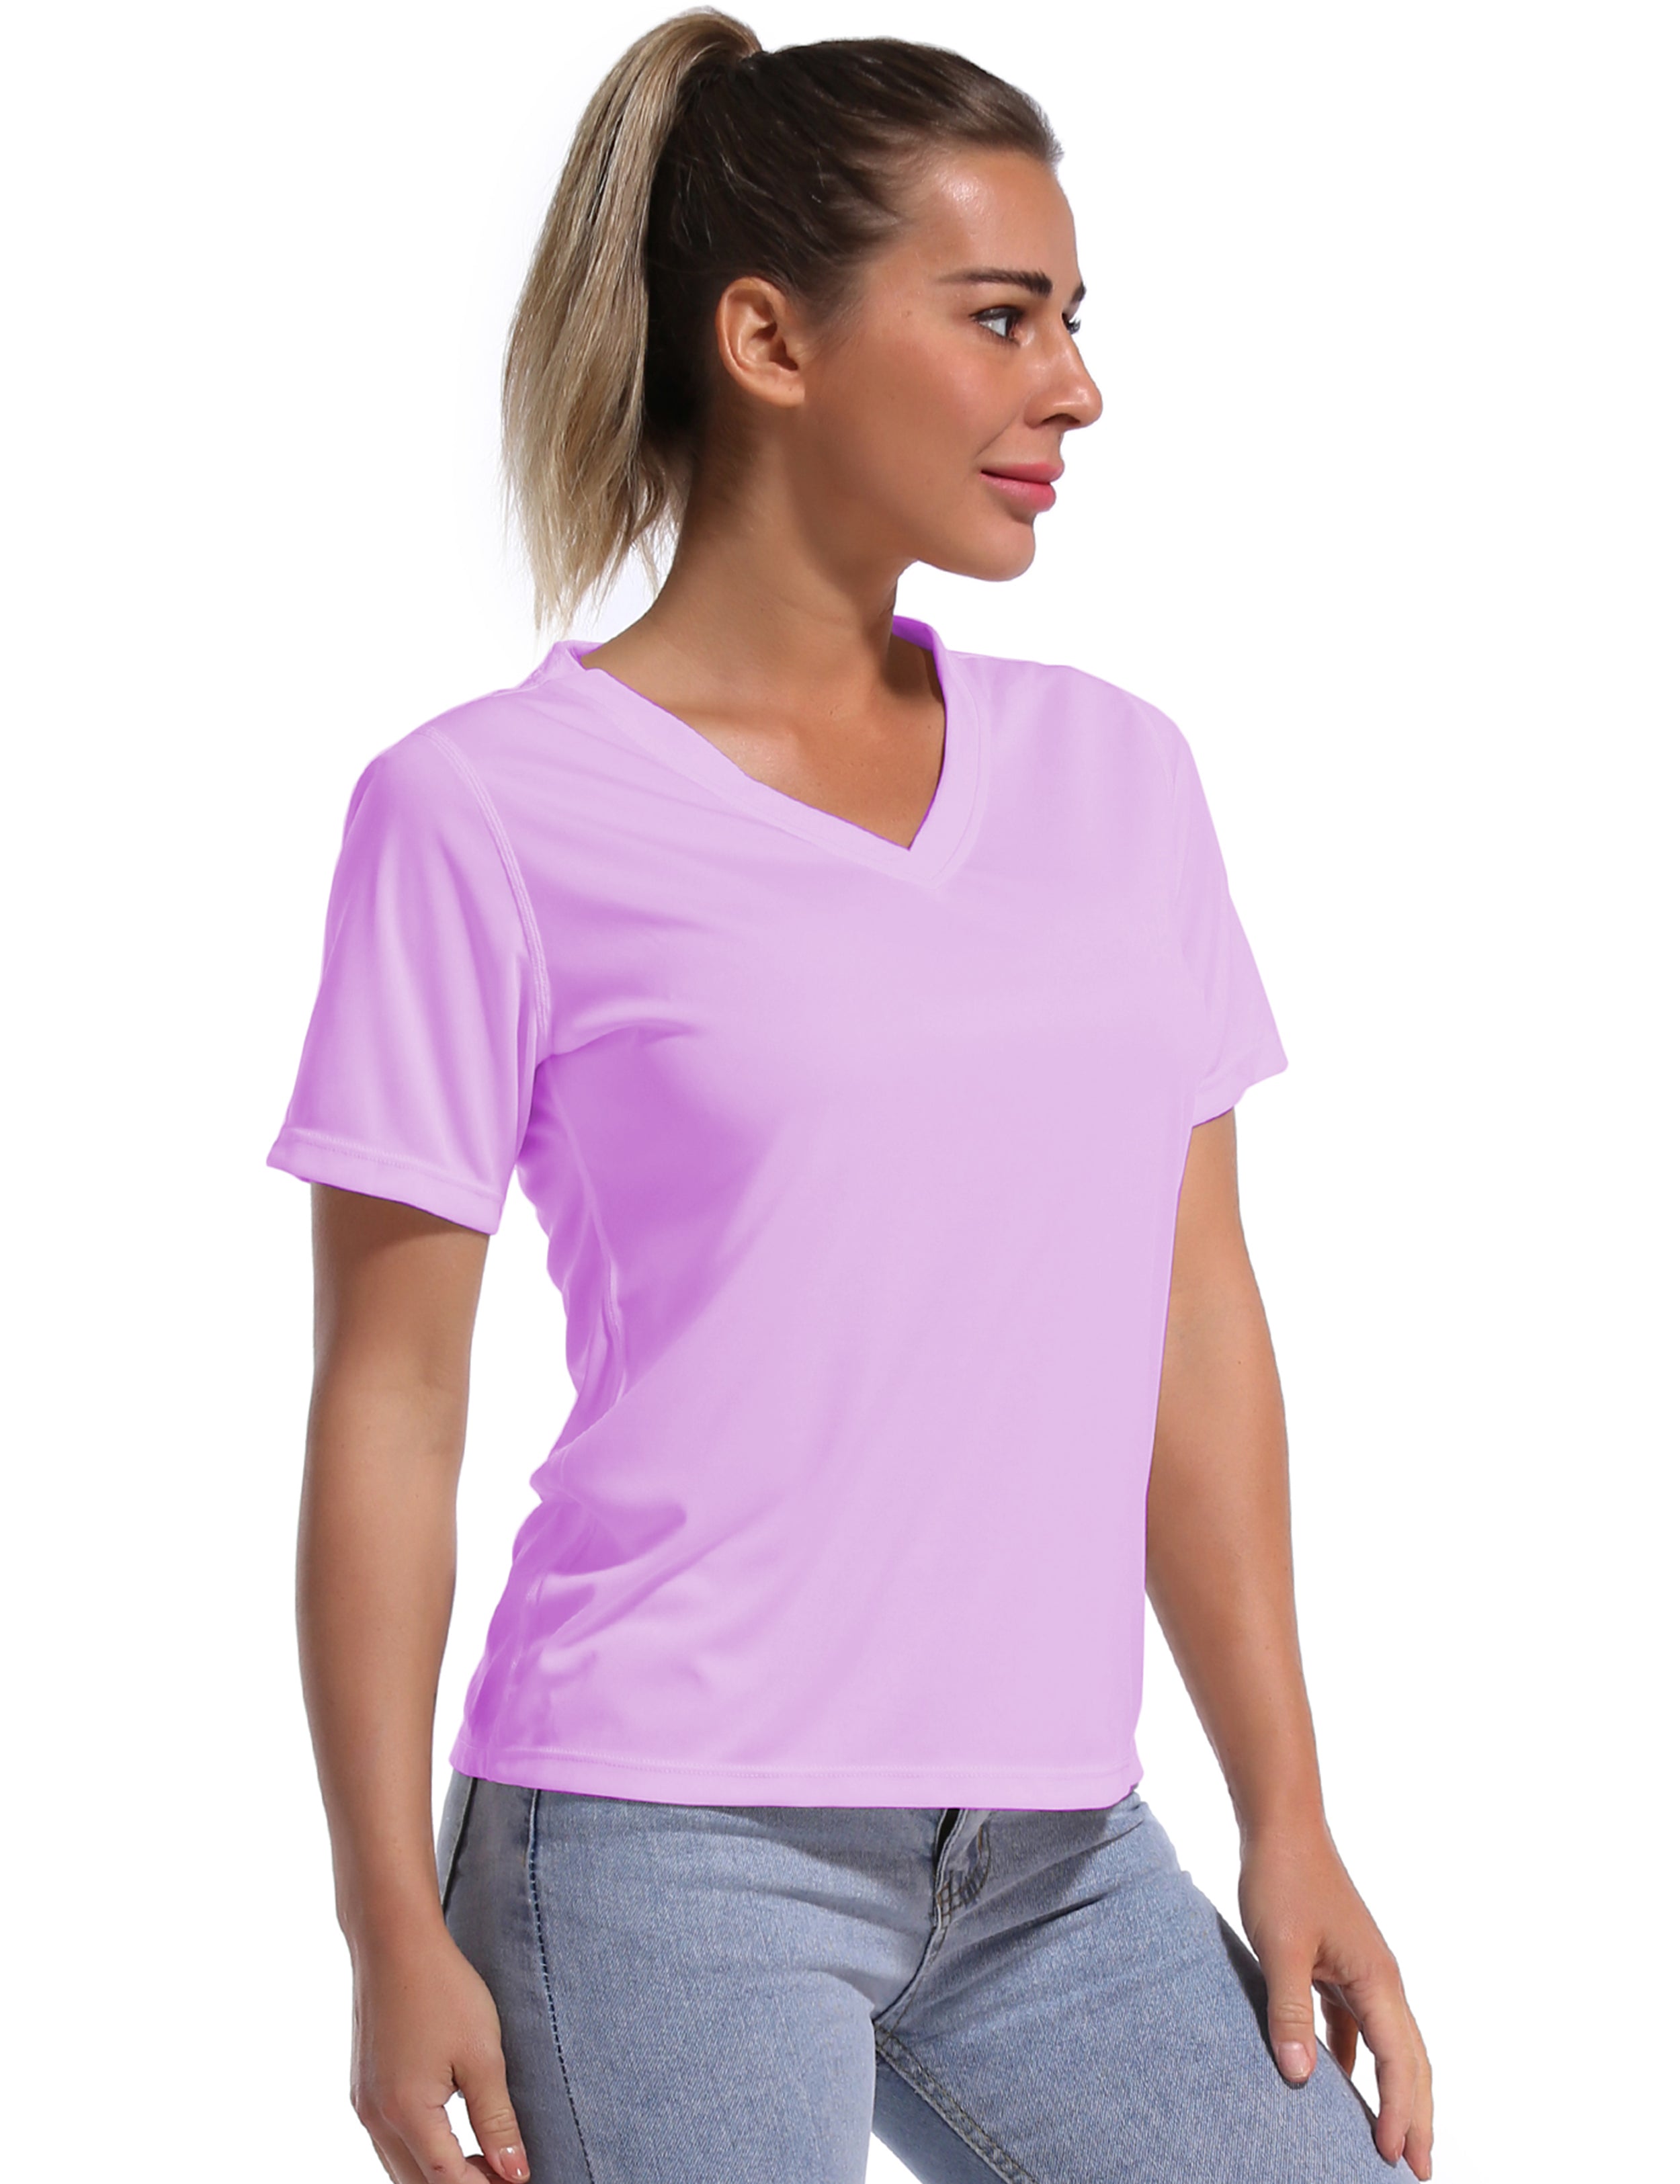 V-Neck Short Sleeve Athletic Shirts purple_Running